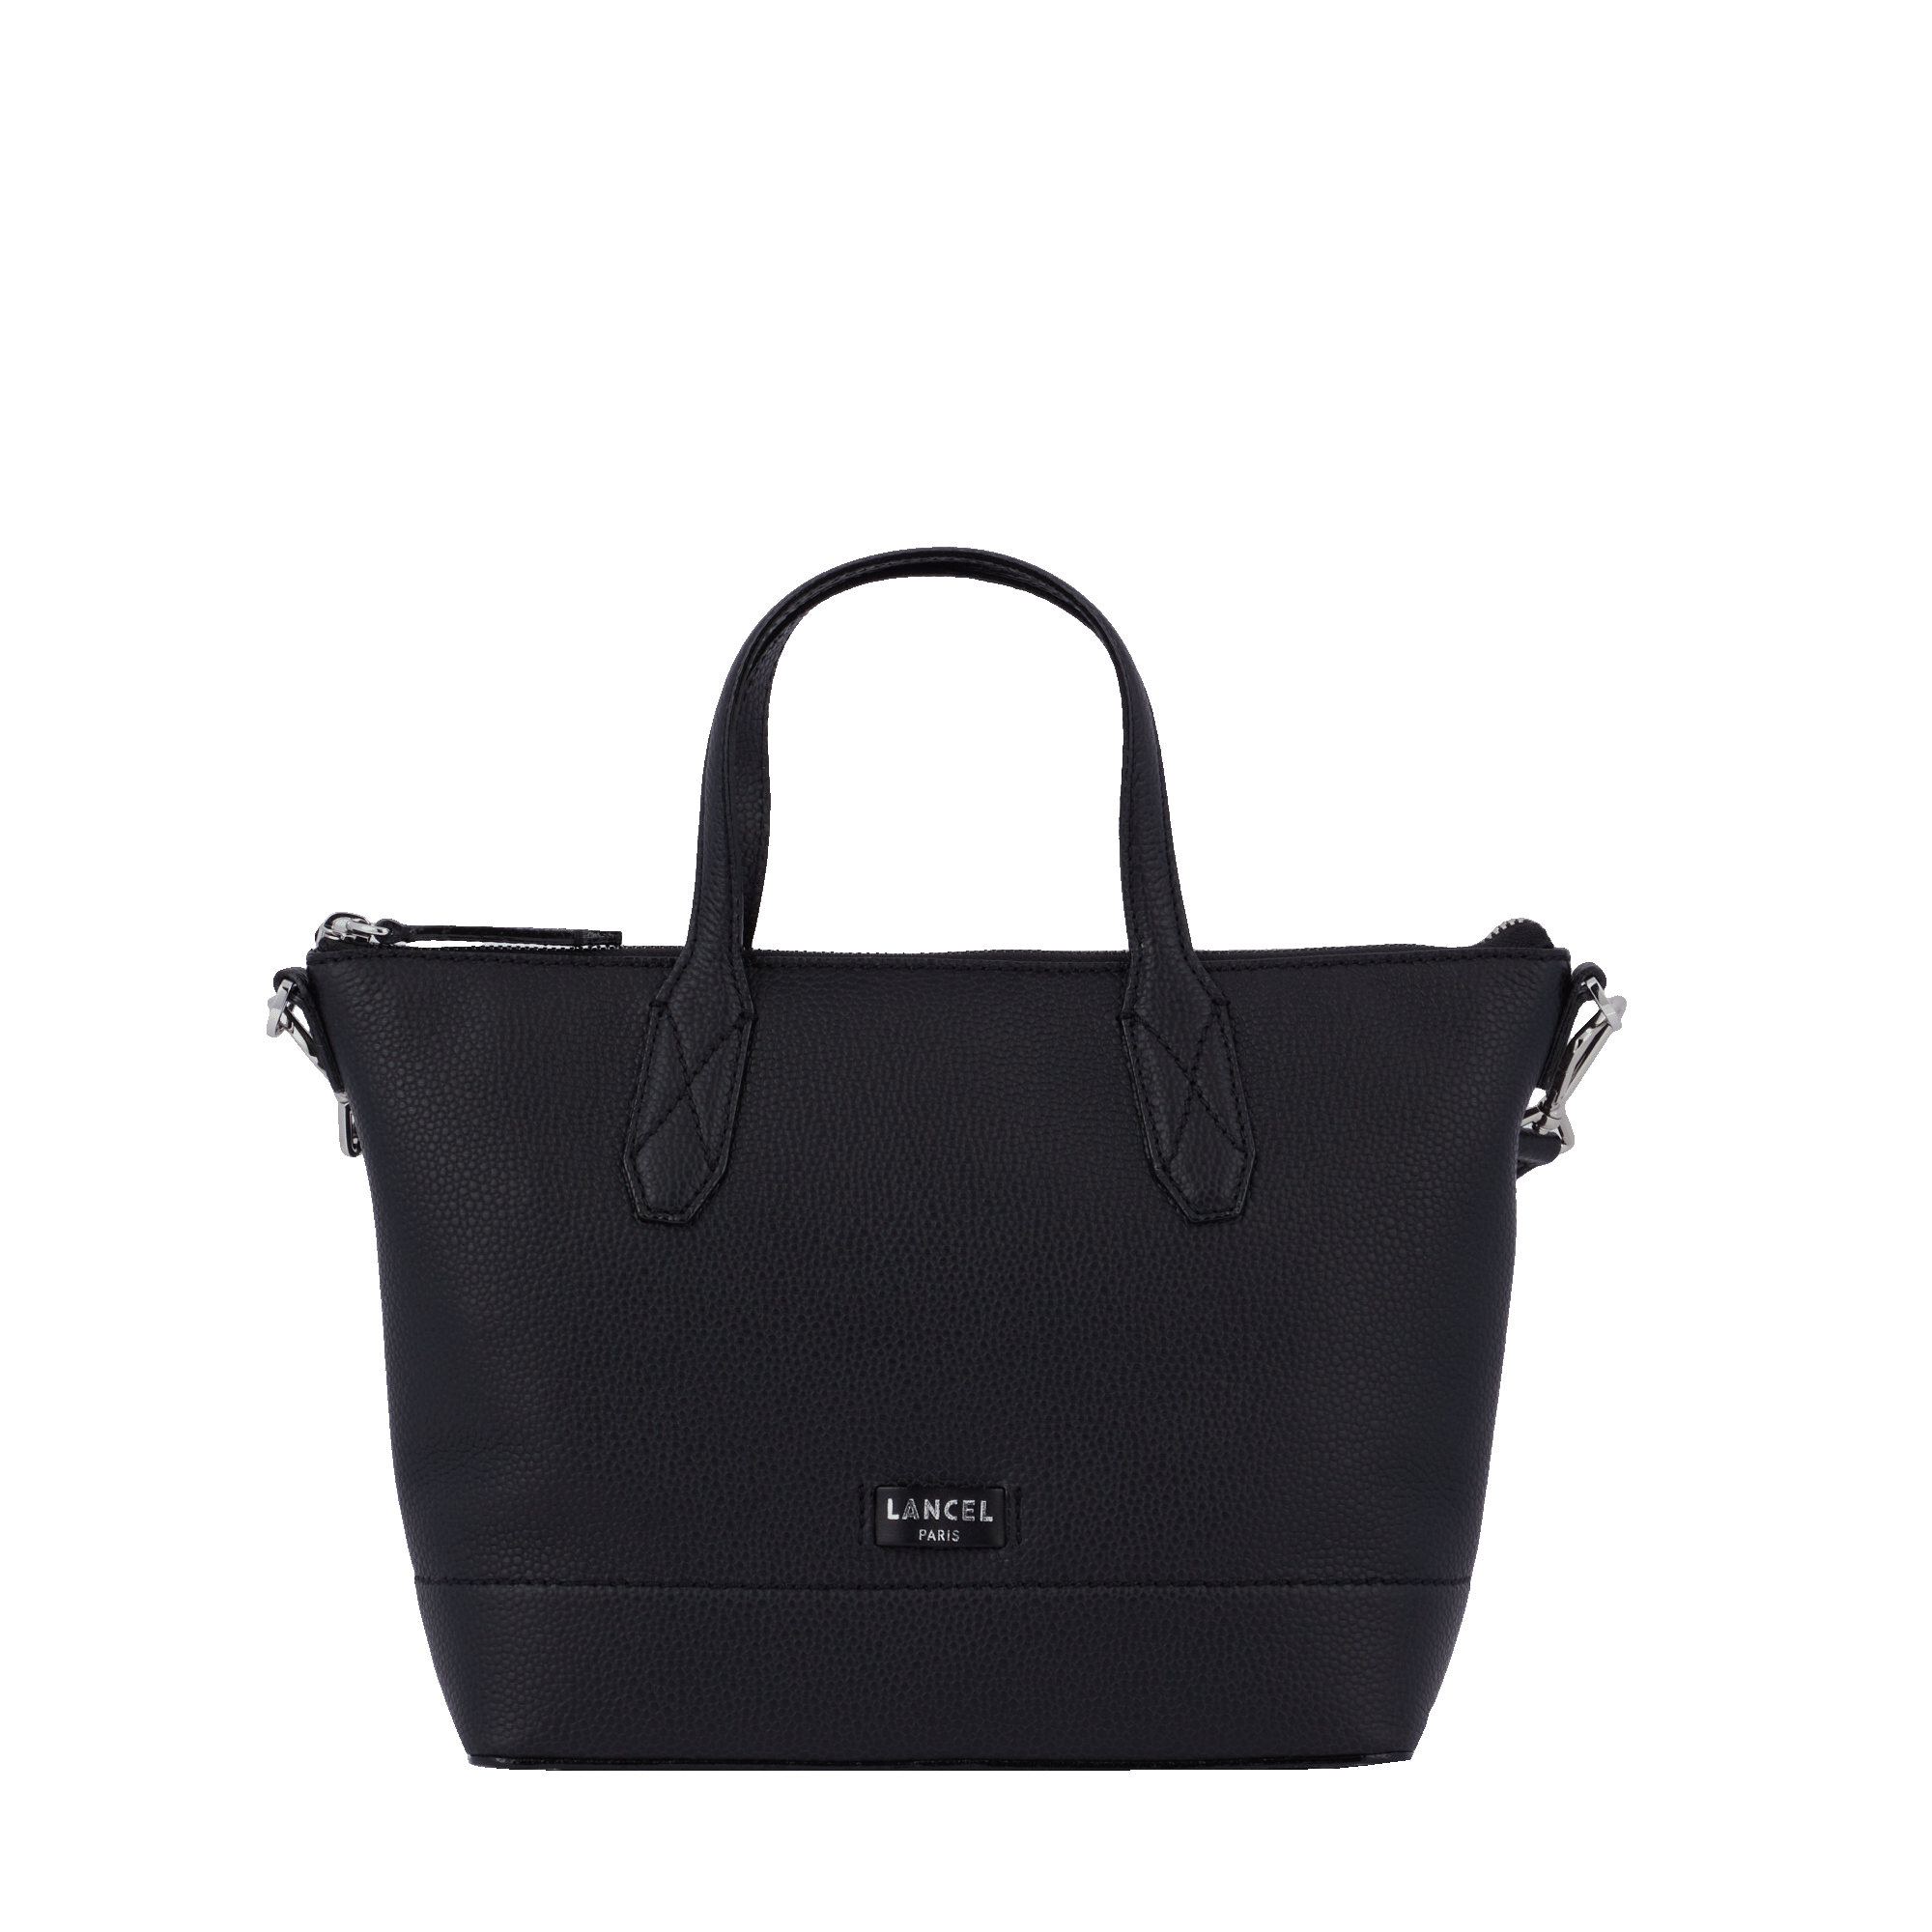 Paris Zipper Black Tote Bag